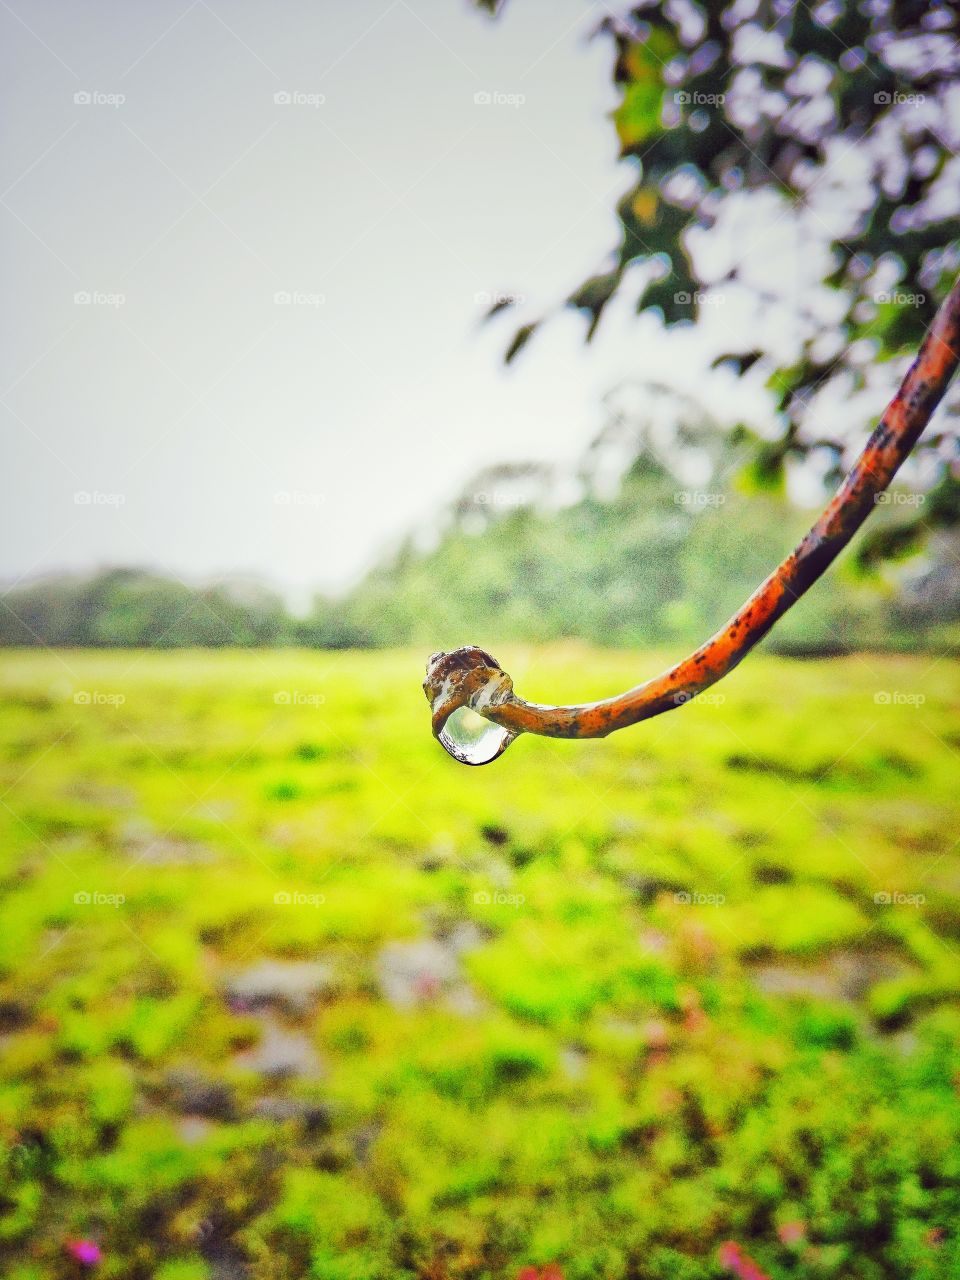 rainy drop capture